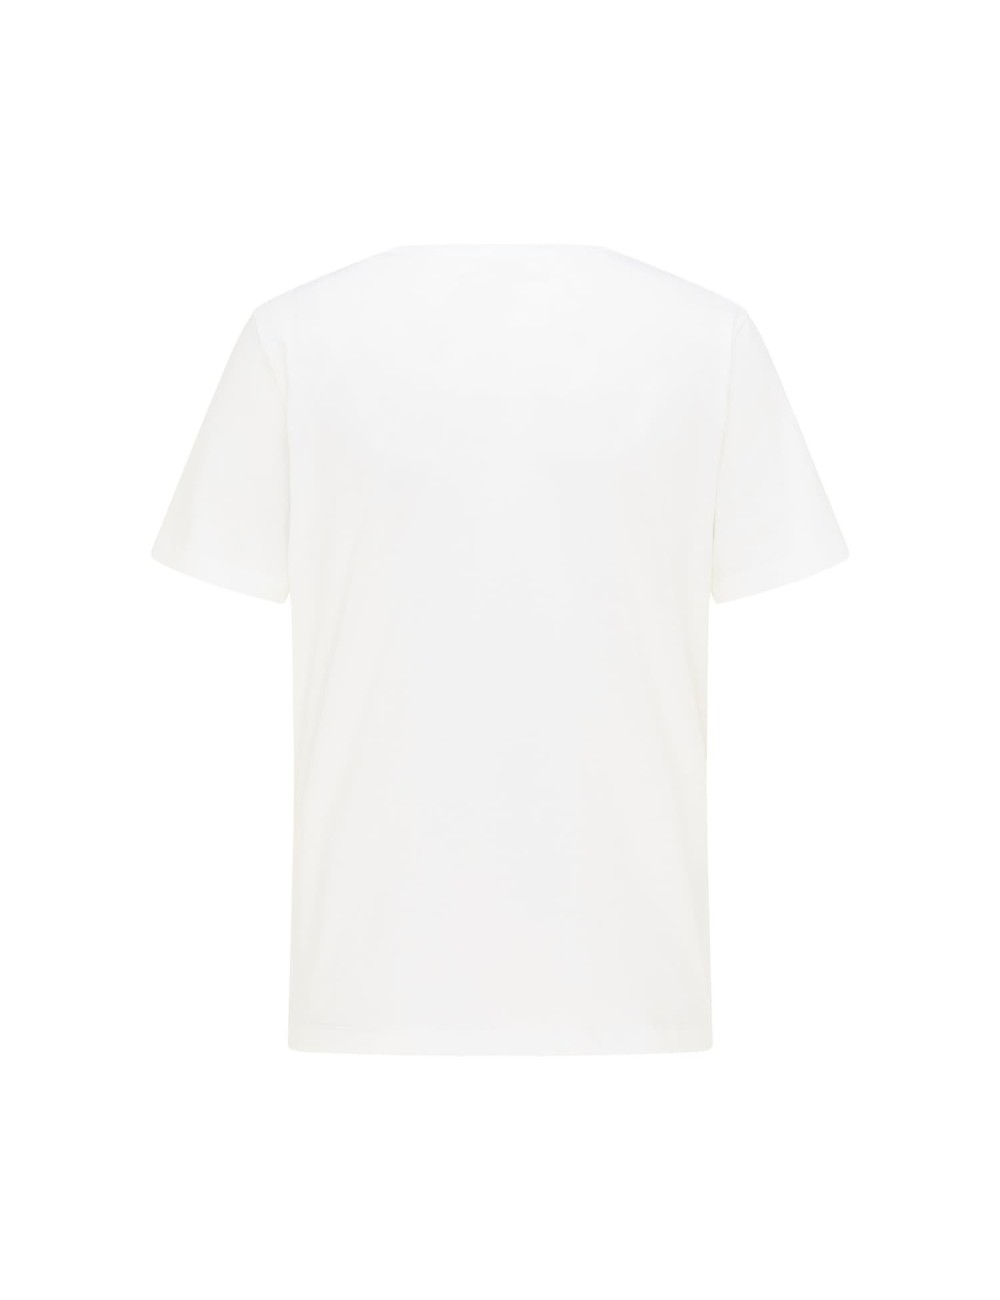 Somwr t-shirt donna pentagon bianco logo - T-shirt & Top Donna